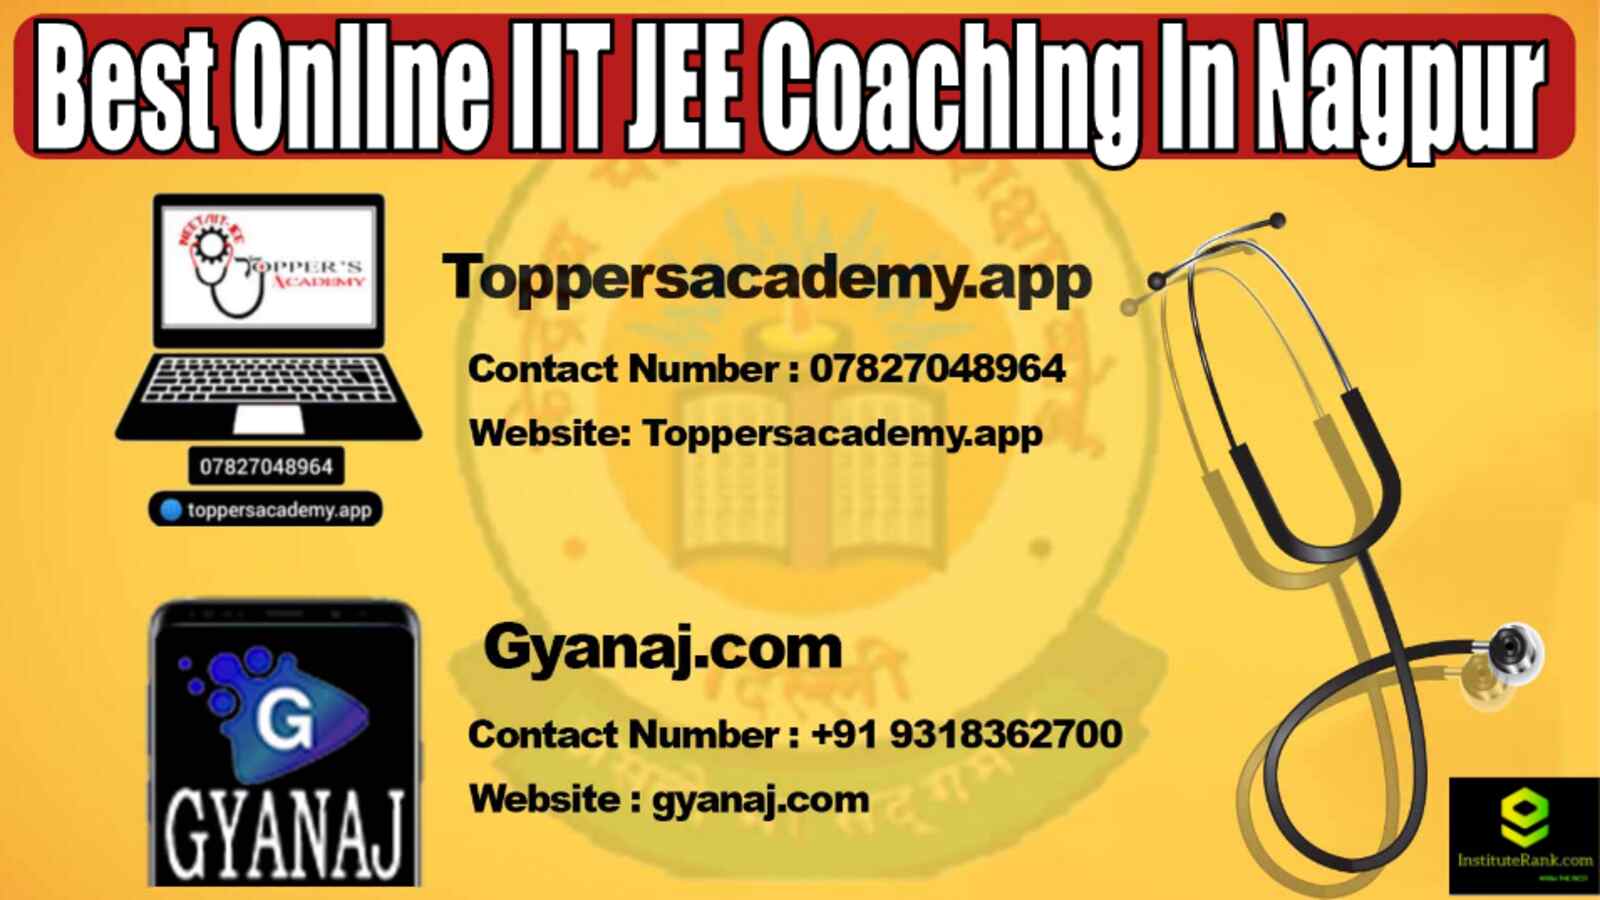 Best Online IIT JEE Coaching in Nagpur 2022